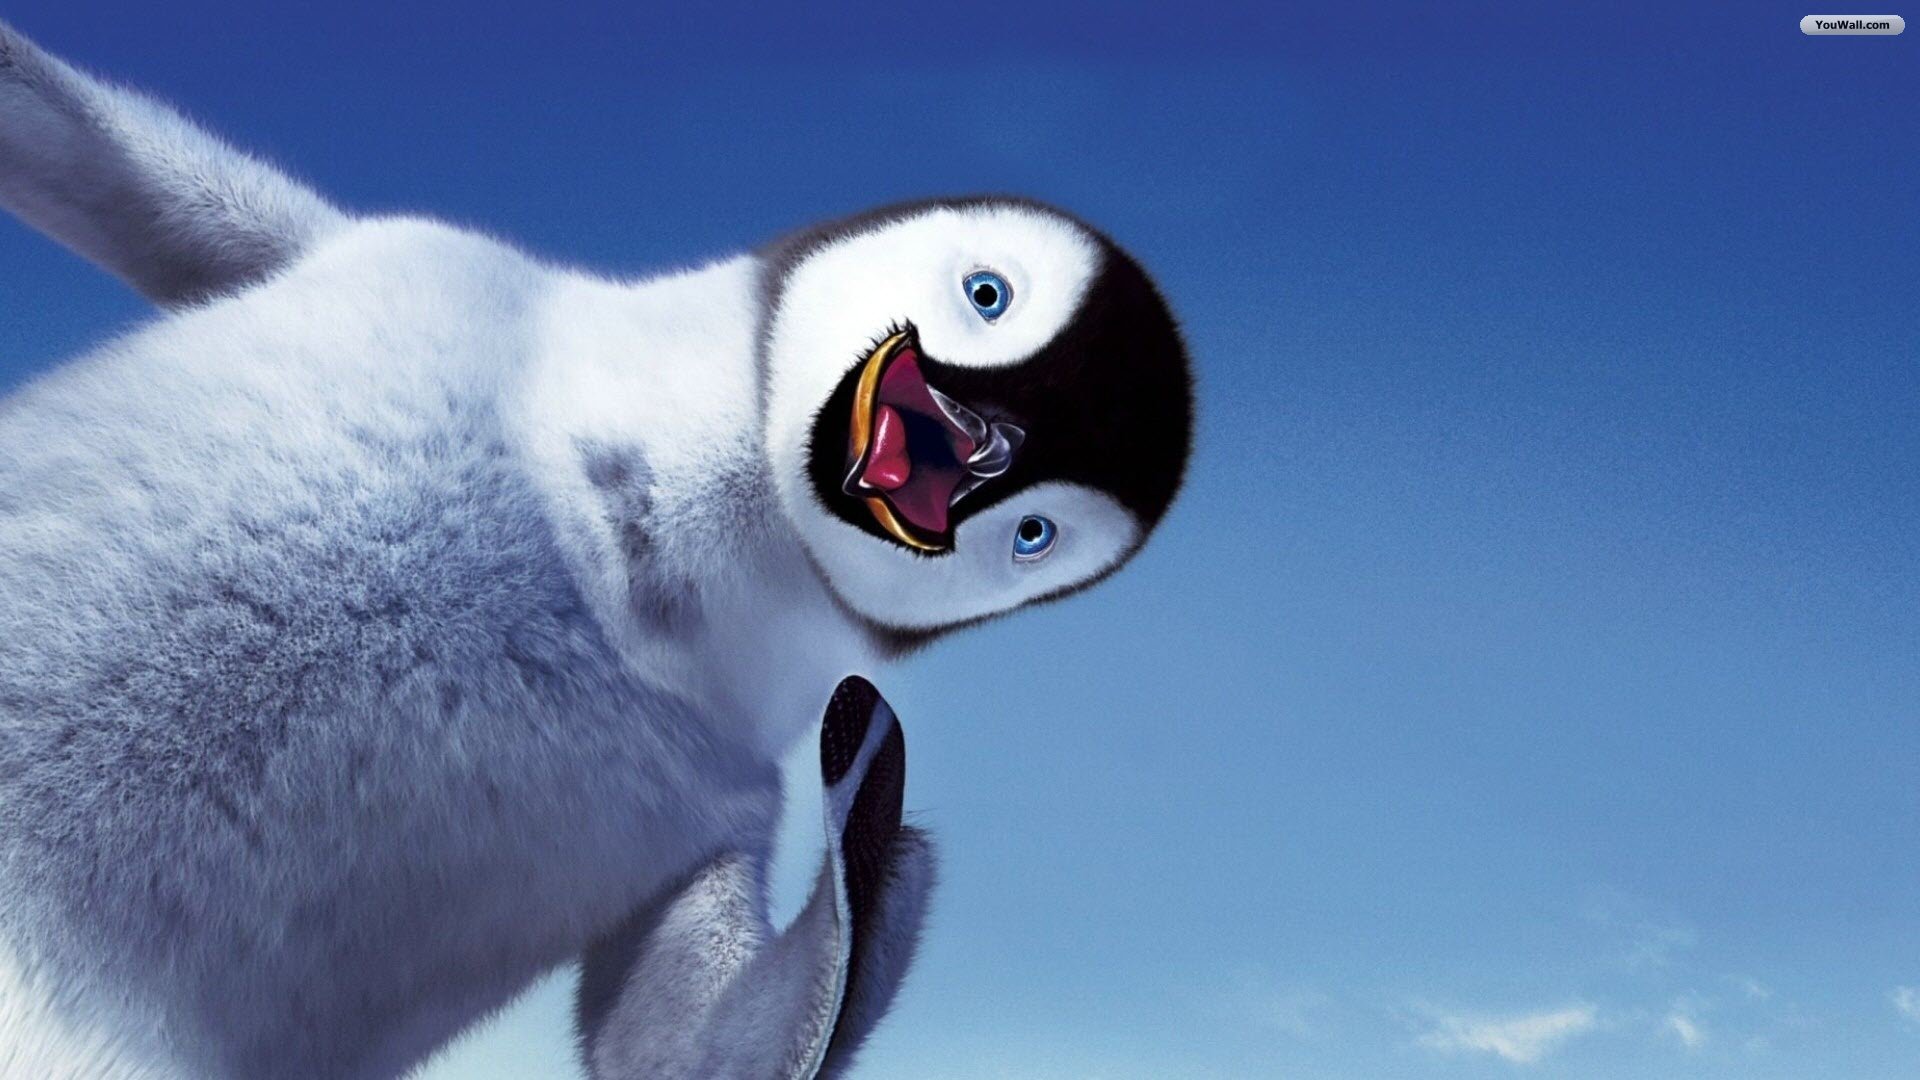 Happy penguin beautiful blue sky on background